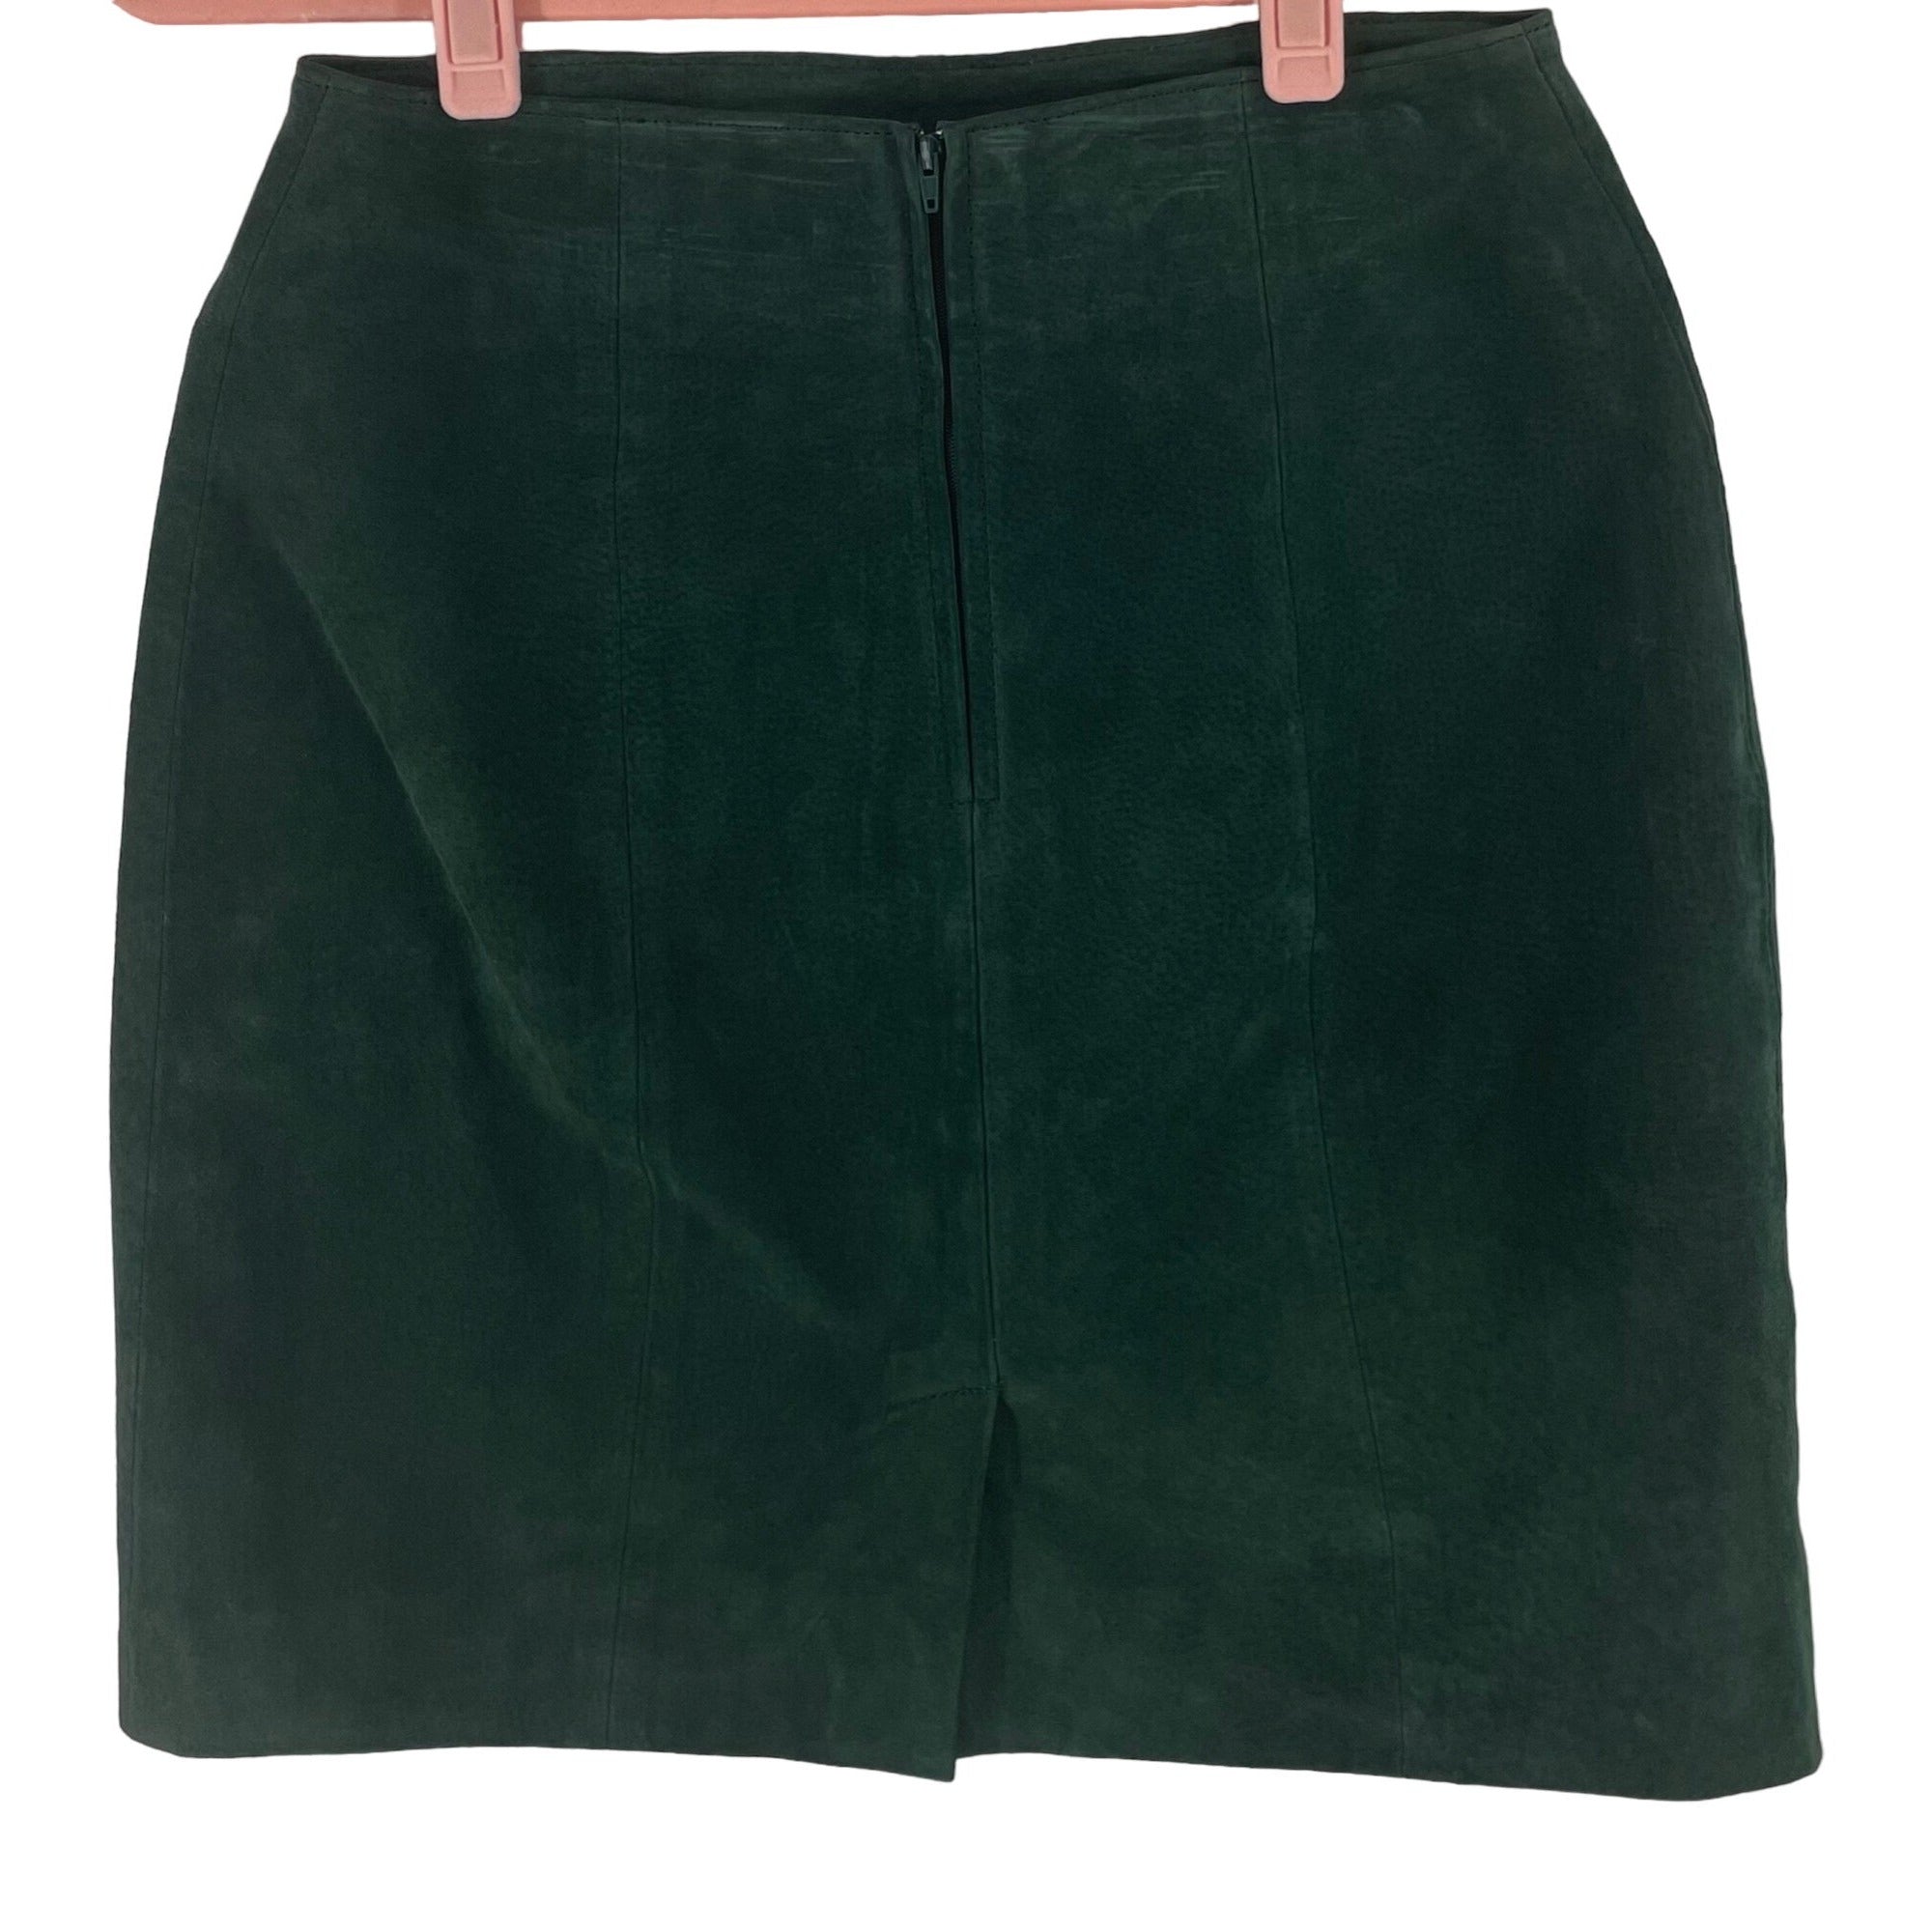 Vintage Savannah Women’s Size 6P Forest Green Leather Mini Skirt